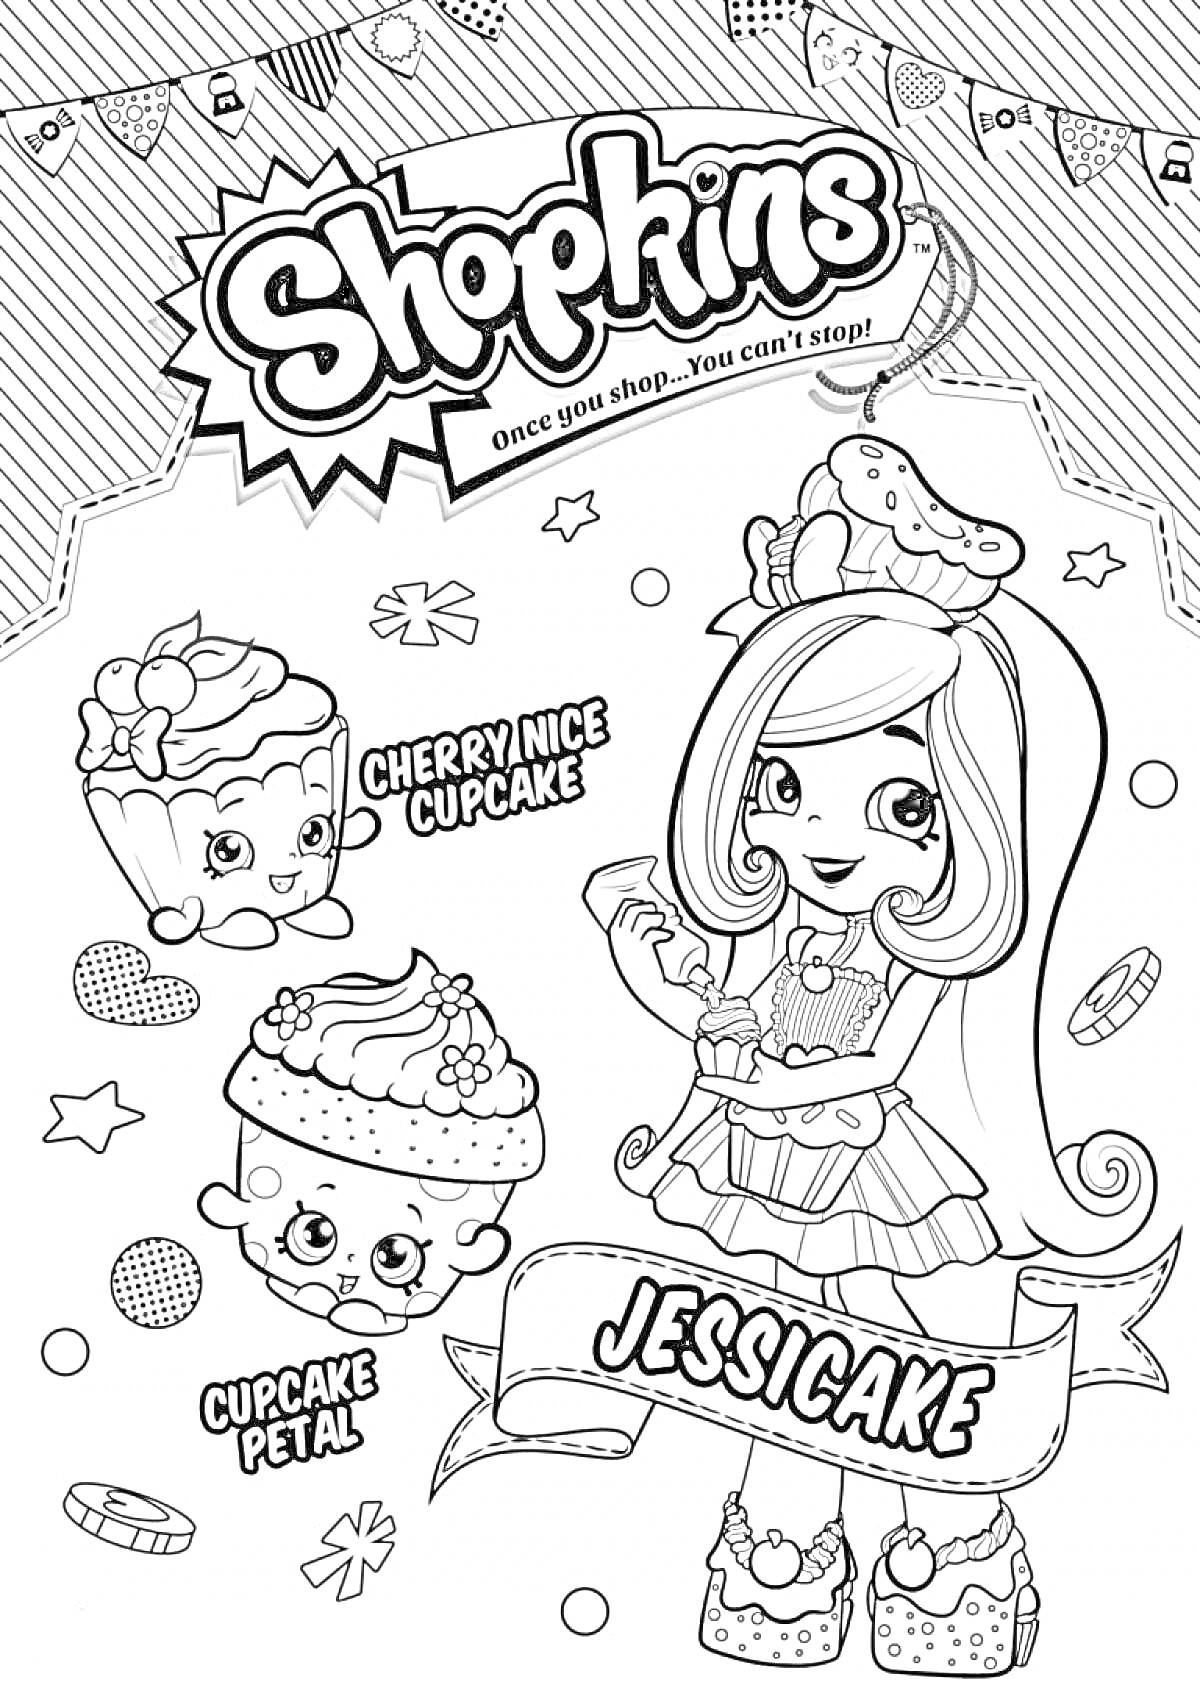 Shopkins с персонажами Jessicake, Cherry Nice Cupcake и Cupcake Petal